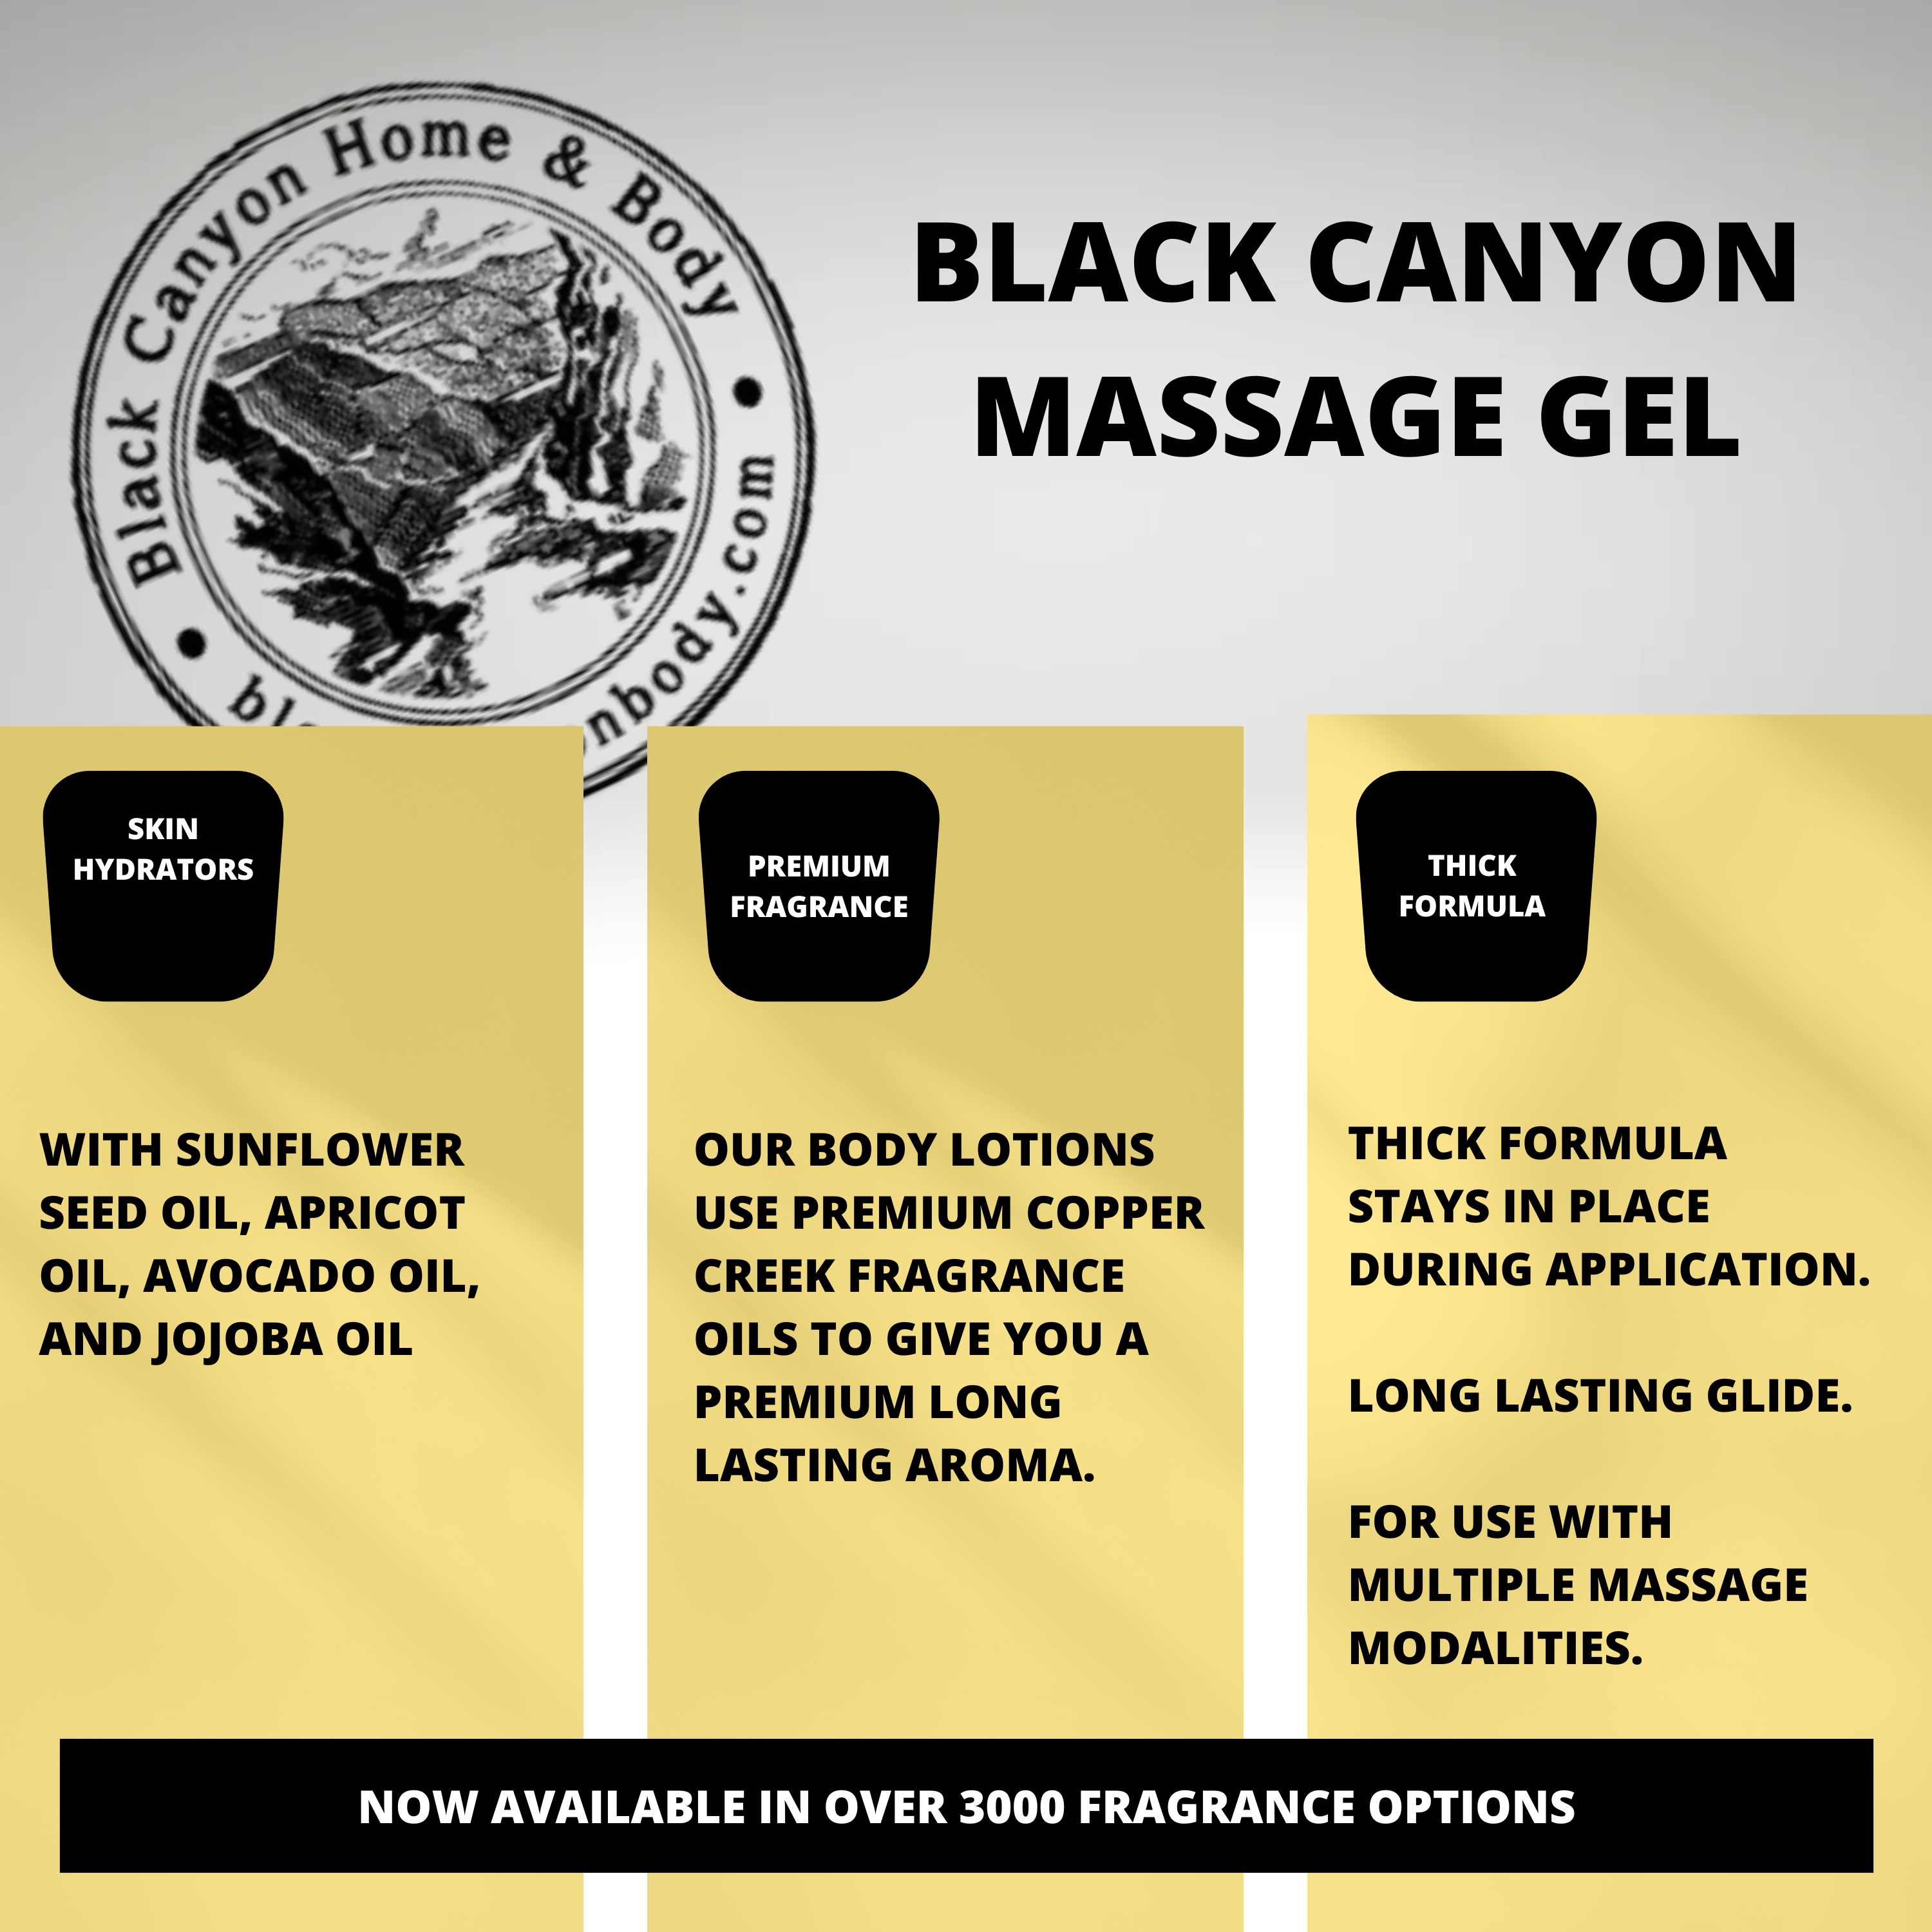 Black Canyon Citrus Berry Scented Massage Gel